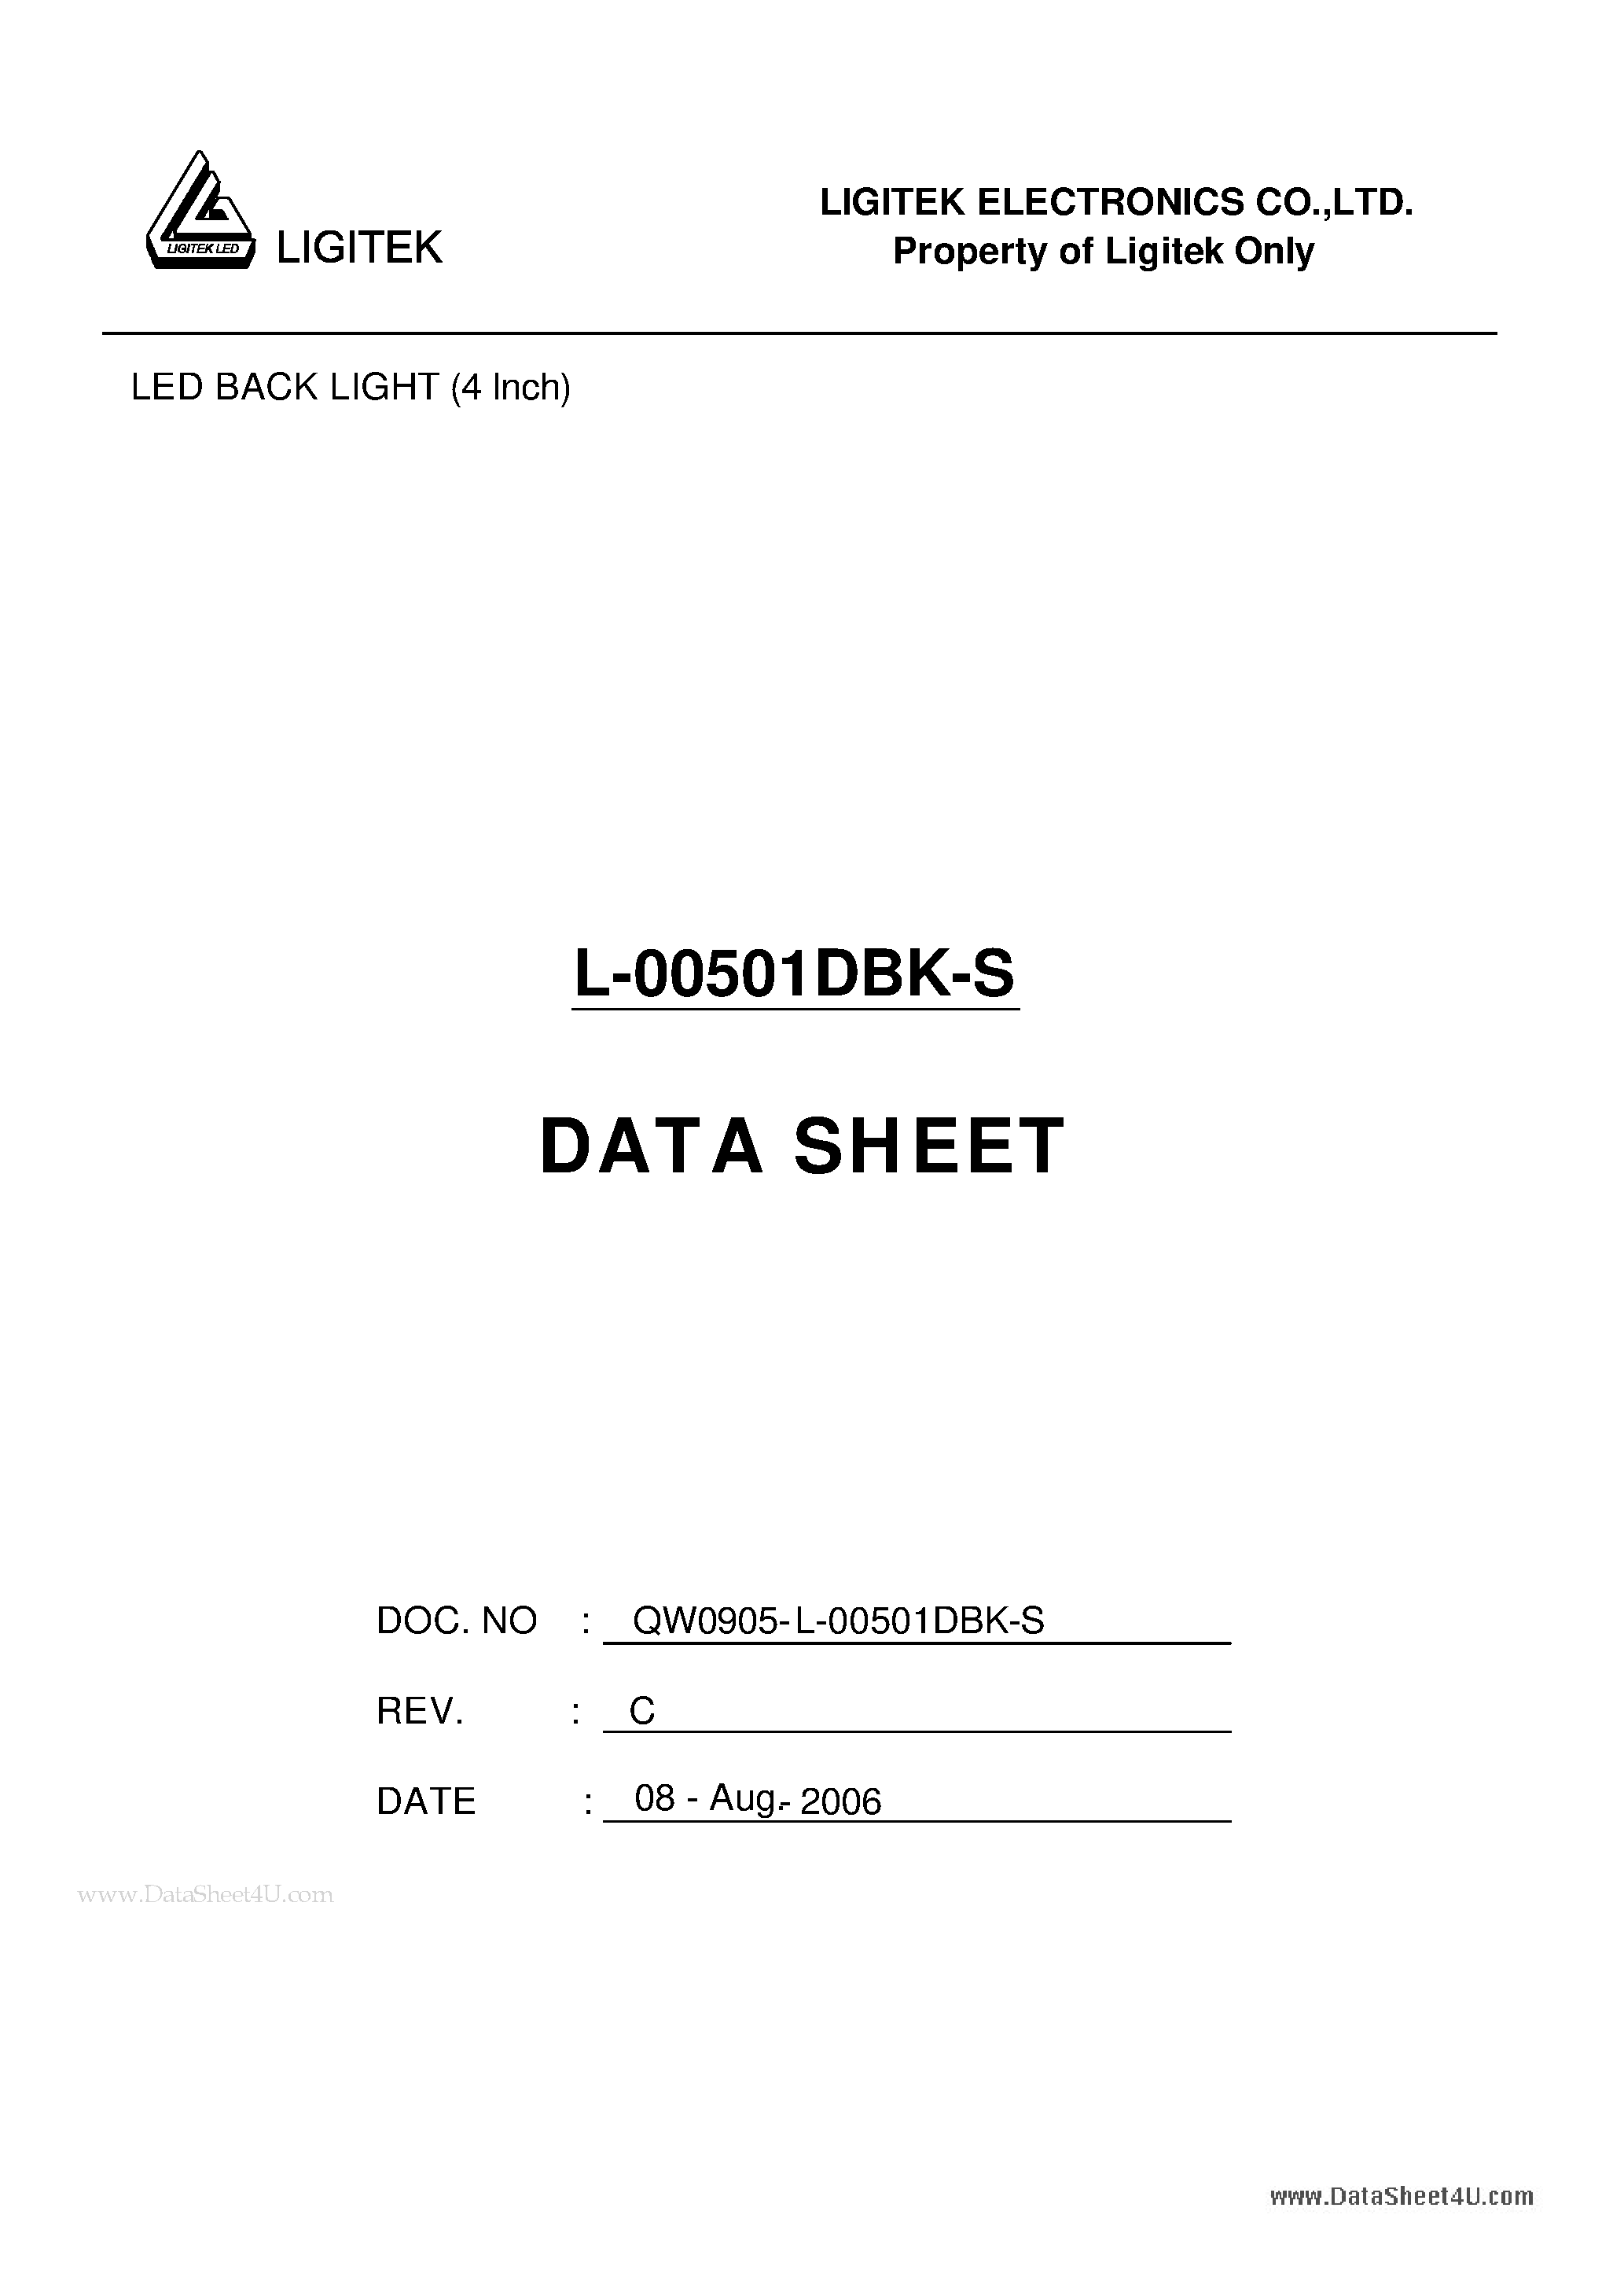 Datasheet L-00501DBK-S - LED BACK LIGHT (4 Inch) page 1